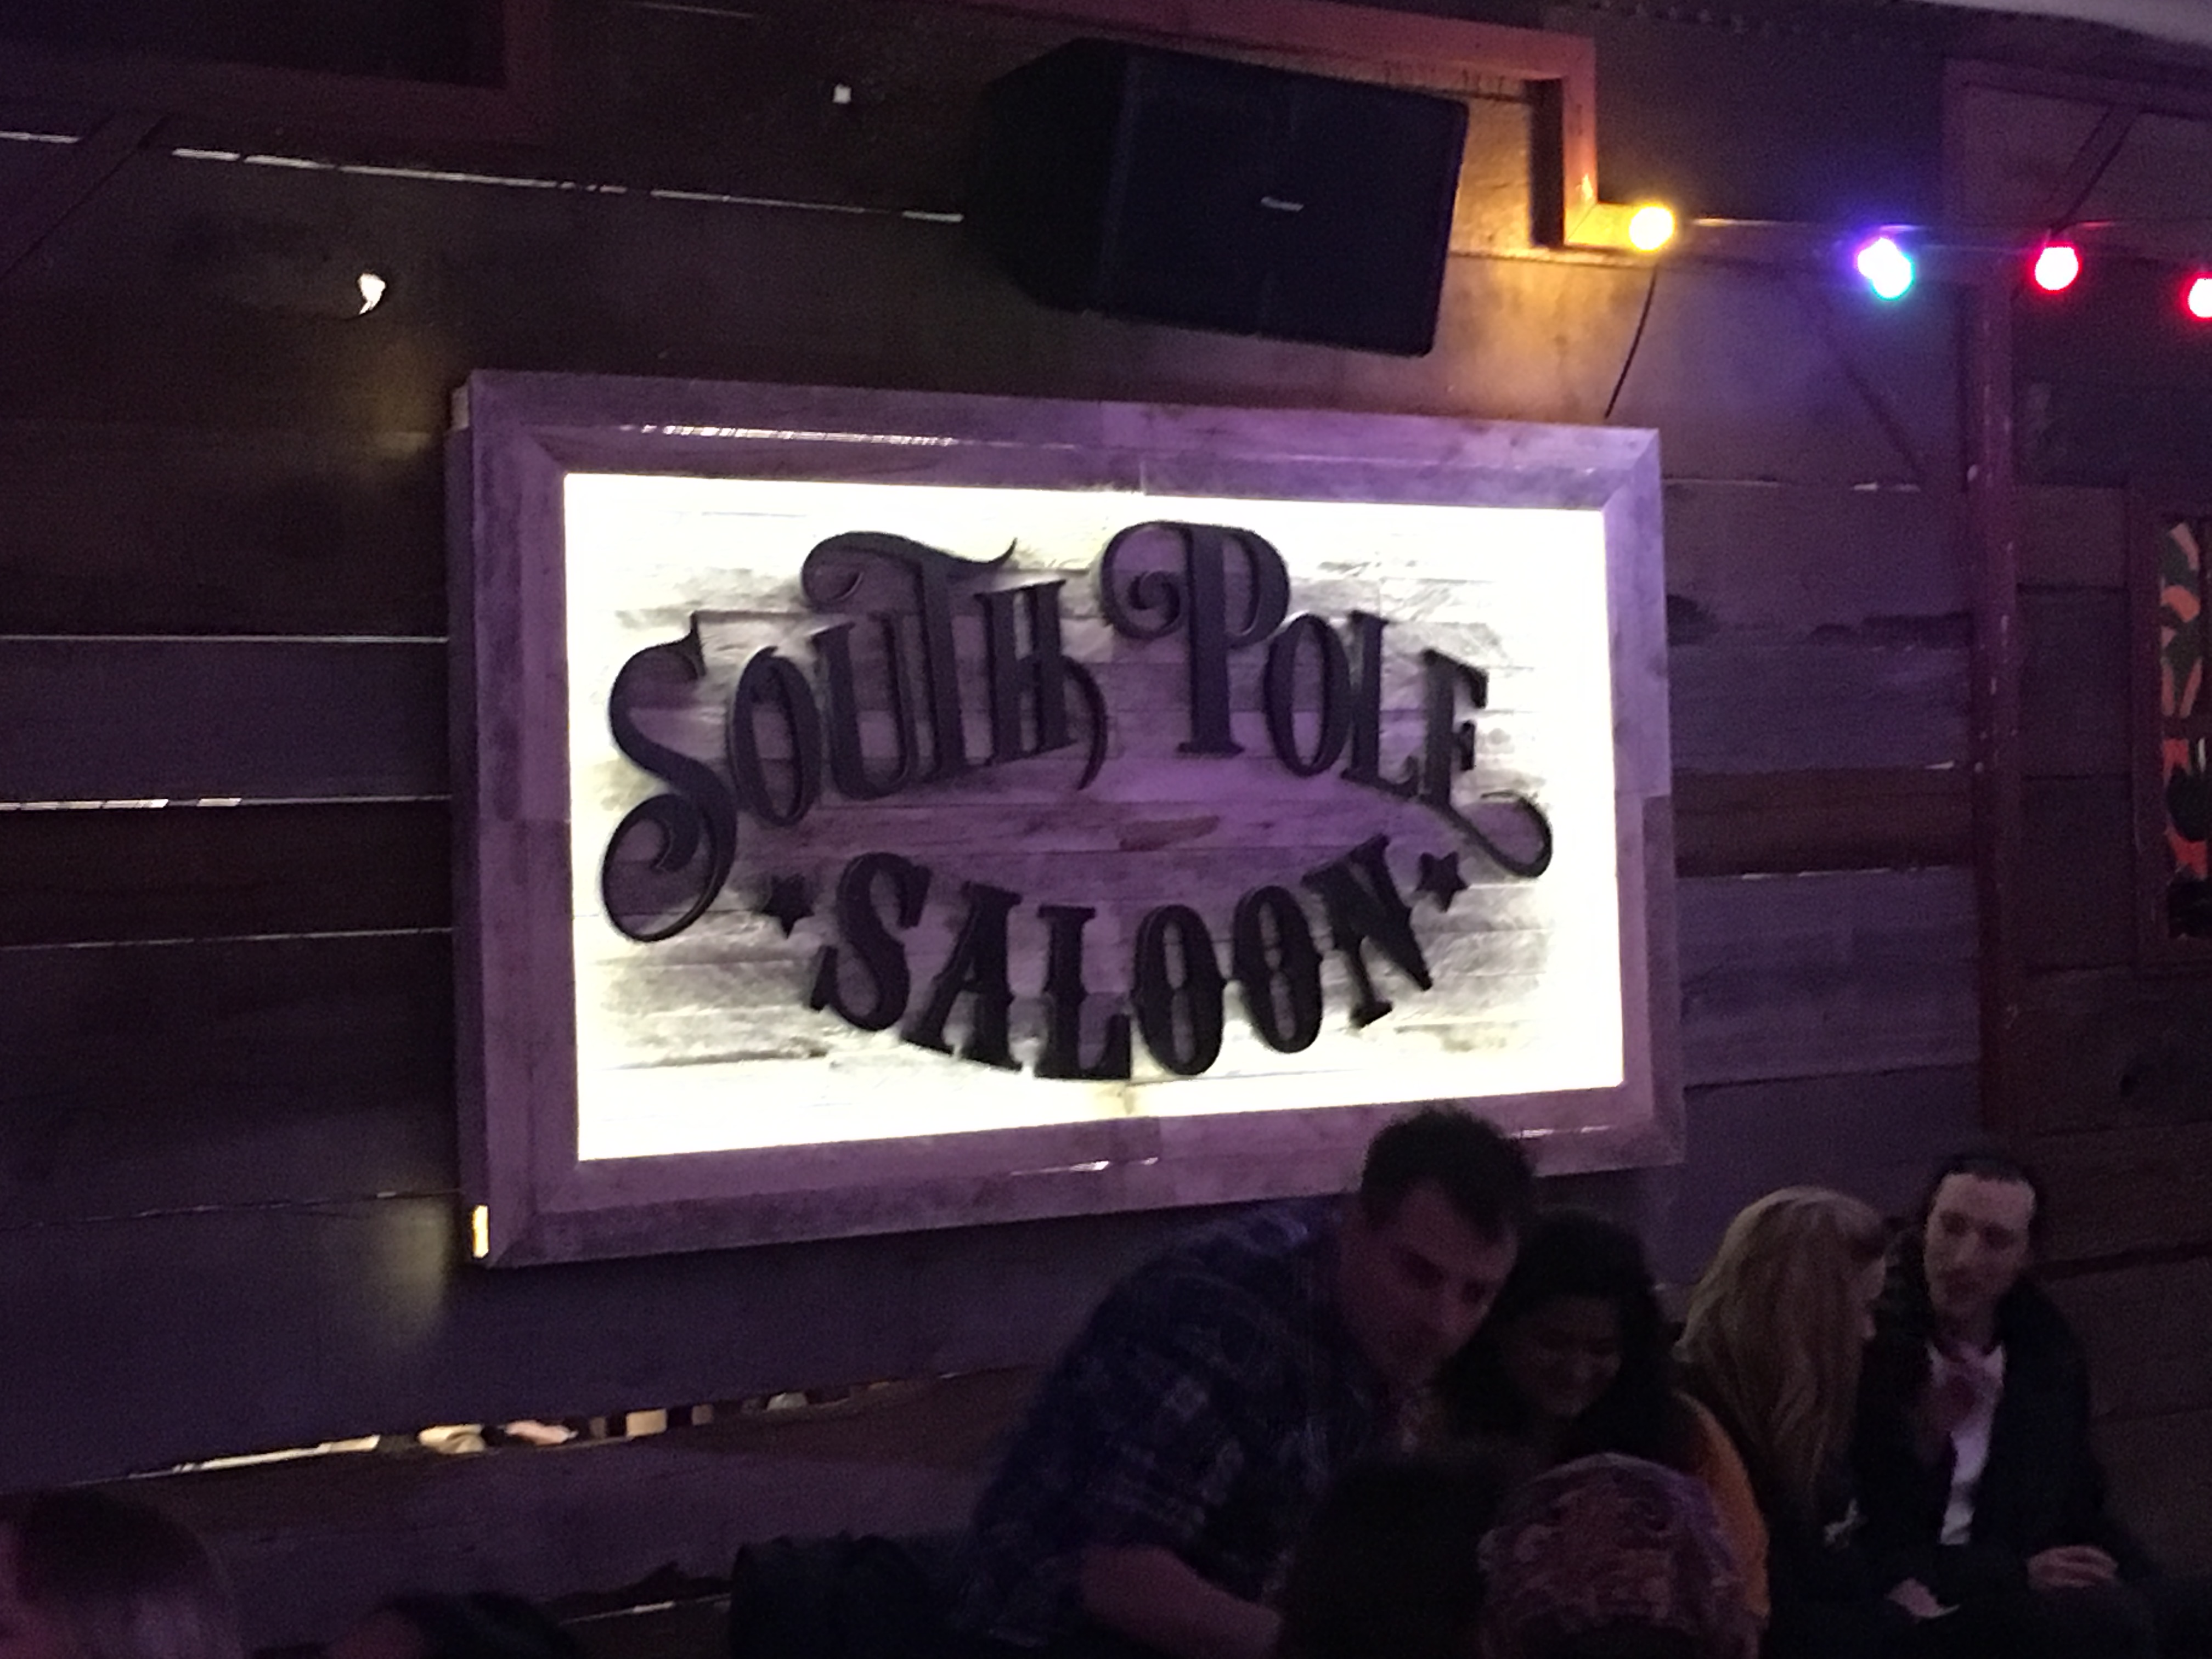 Festive Fun at South Pole Saloon